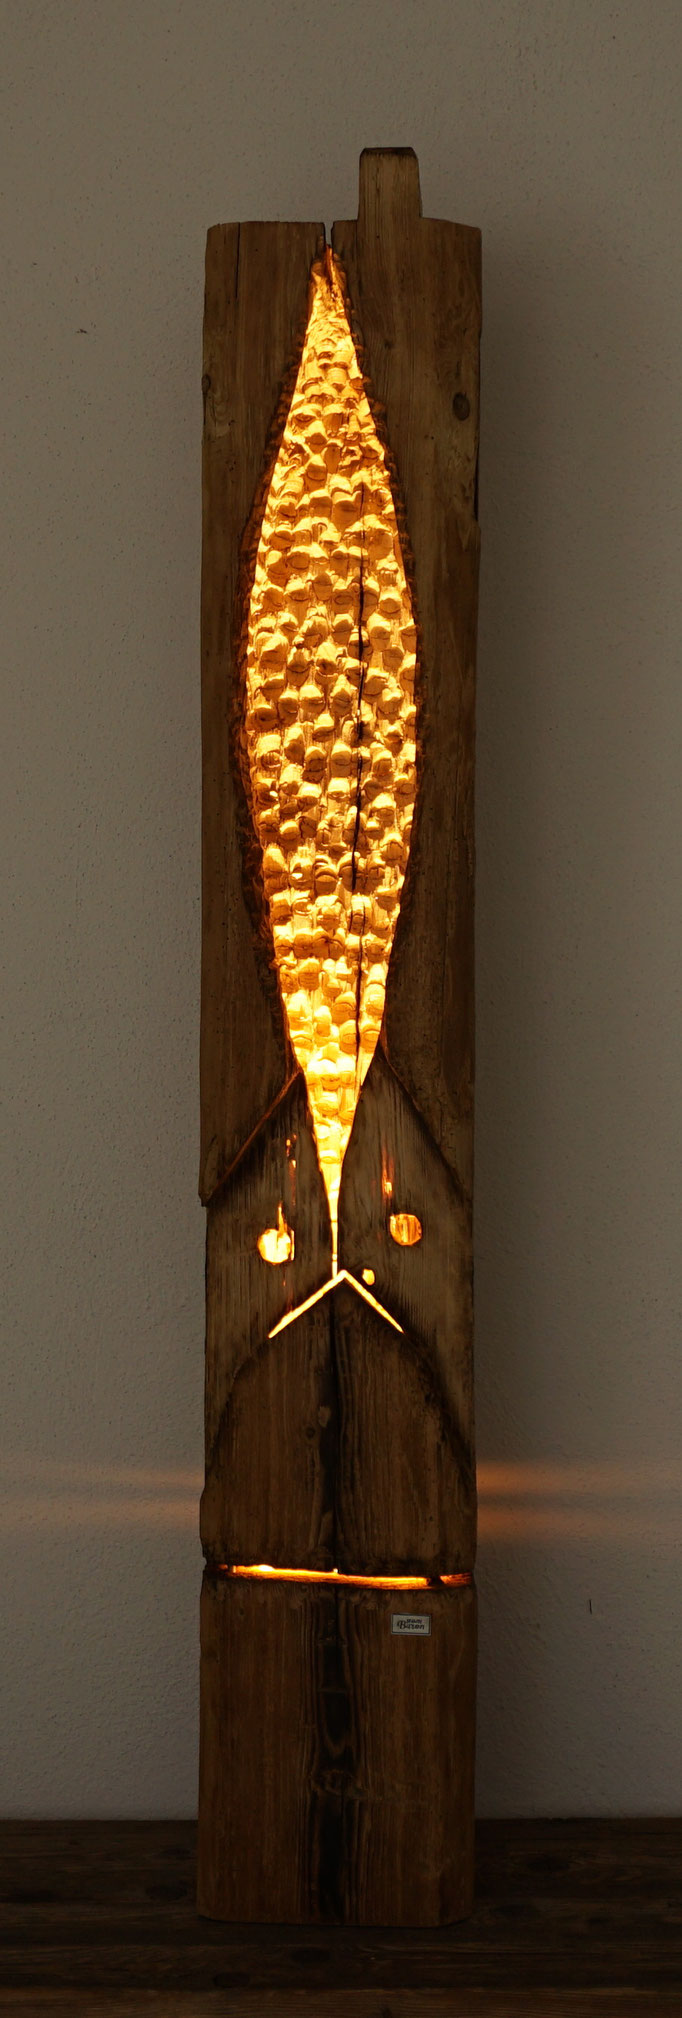 Altholz Lampe-Alter Balken-Fachwerk-Stehlampe-vomBaron